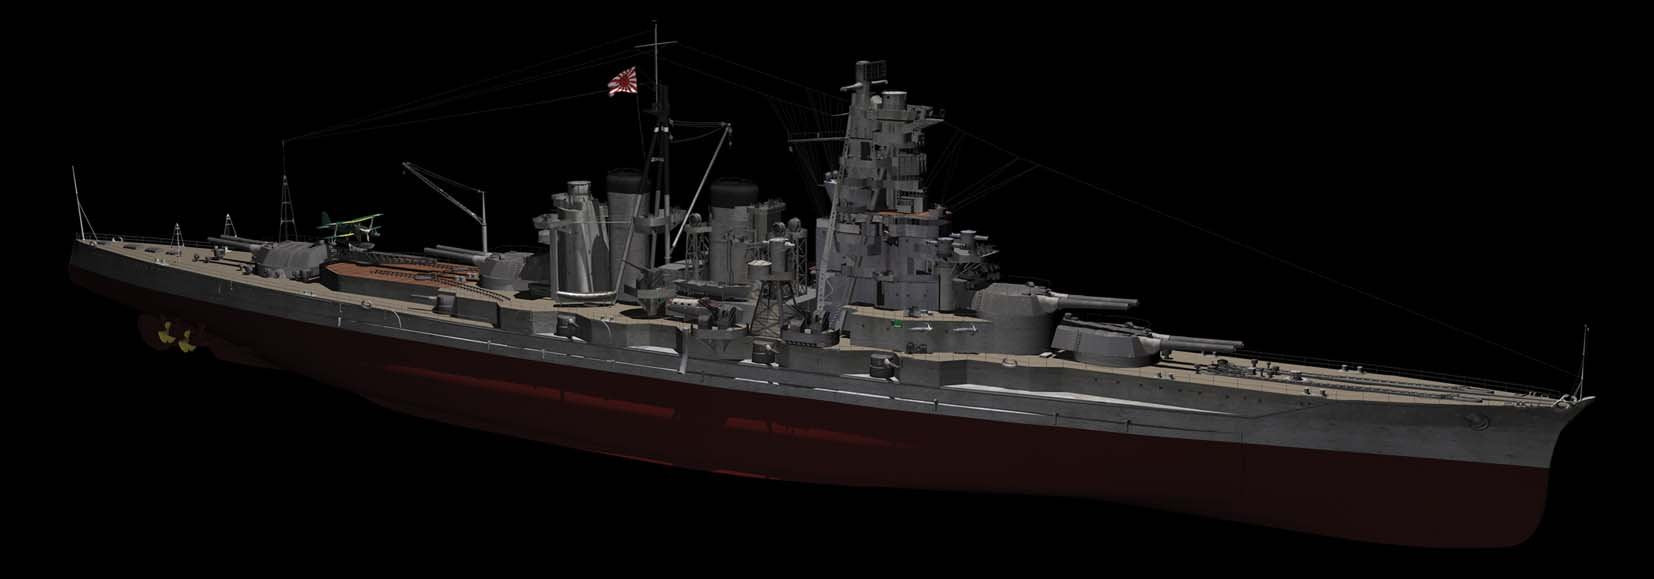 FUJIMI Fh-06 Ijn Battleship Kongo Full Hull Model 1/700 Scale Kit